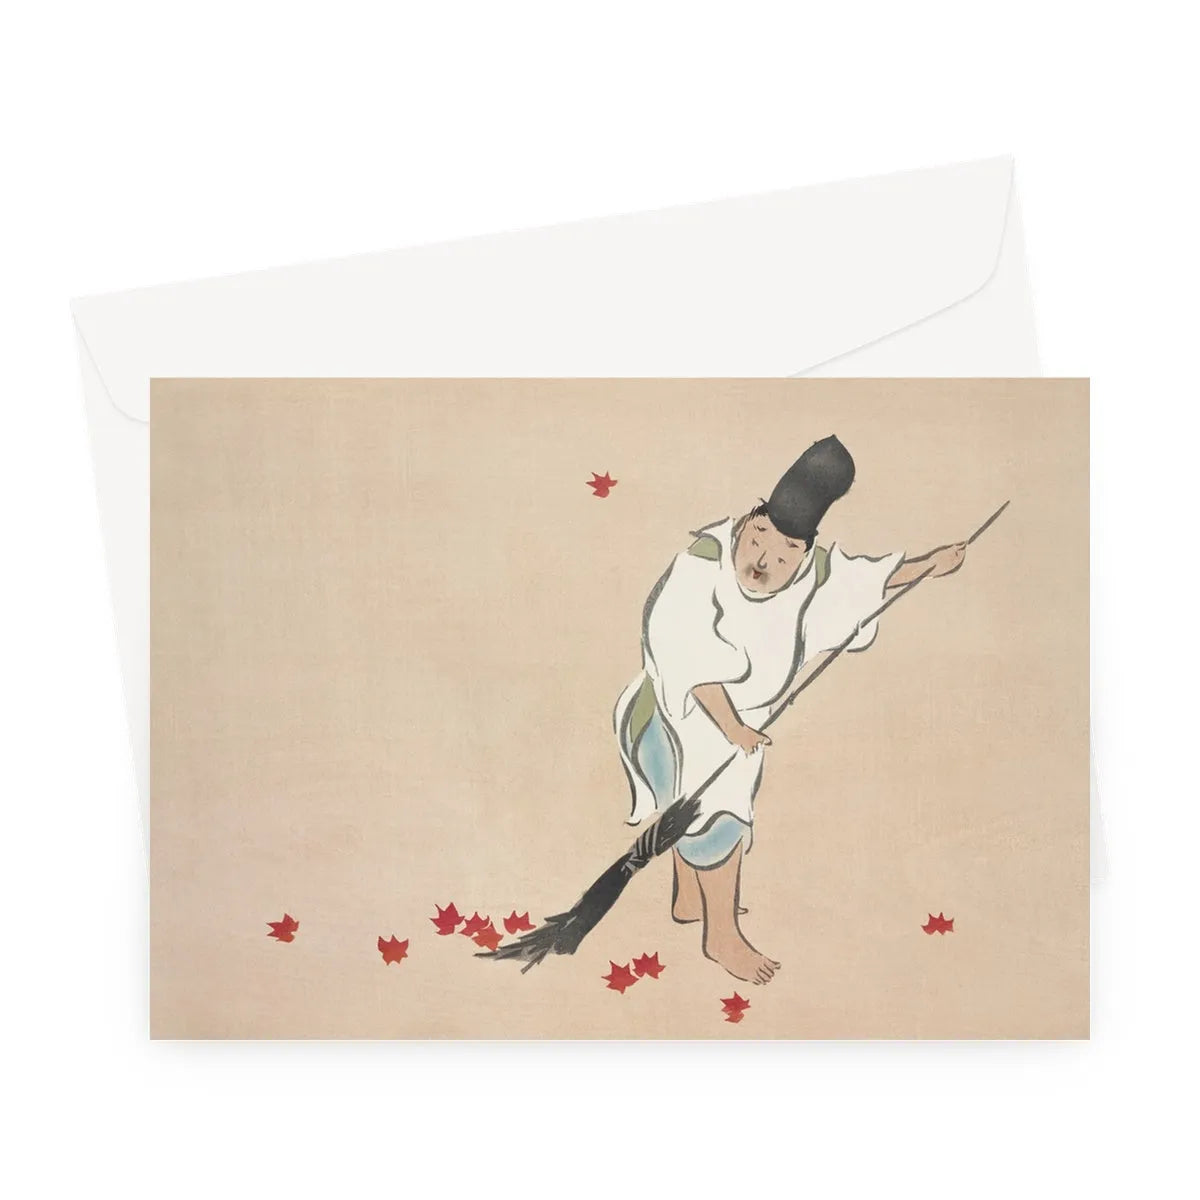 Raking By Kamisaka Sekka Greeting Card - A5 Landscape / 1 Card - Greeting & Note Cards - Aesthetic Art